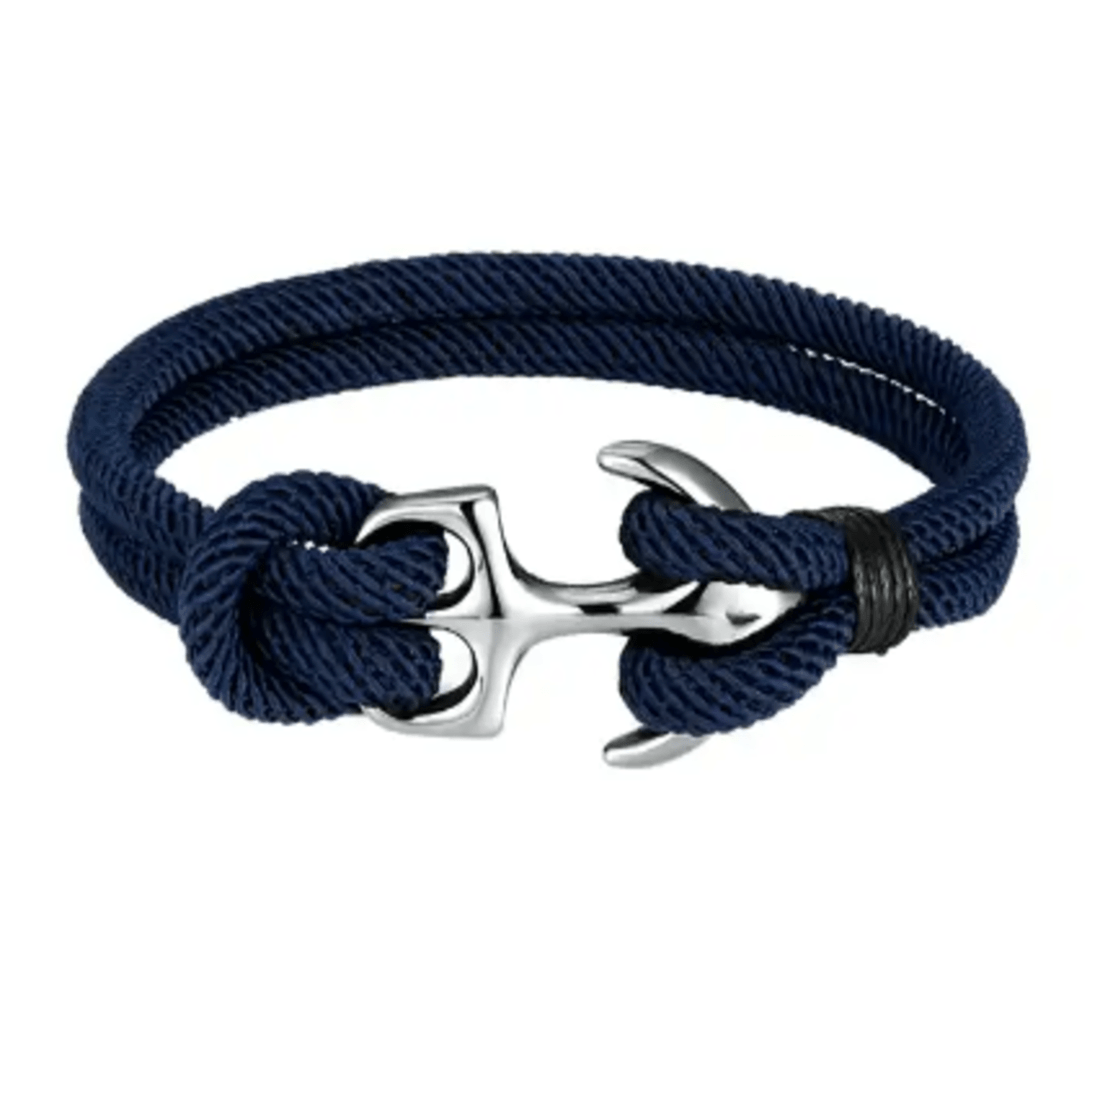 Brazalete de Cuerda con Broche de Titanio Azul x 21cm